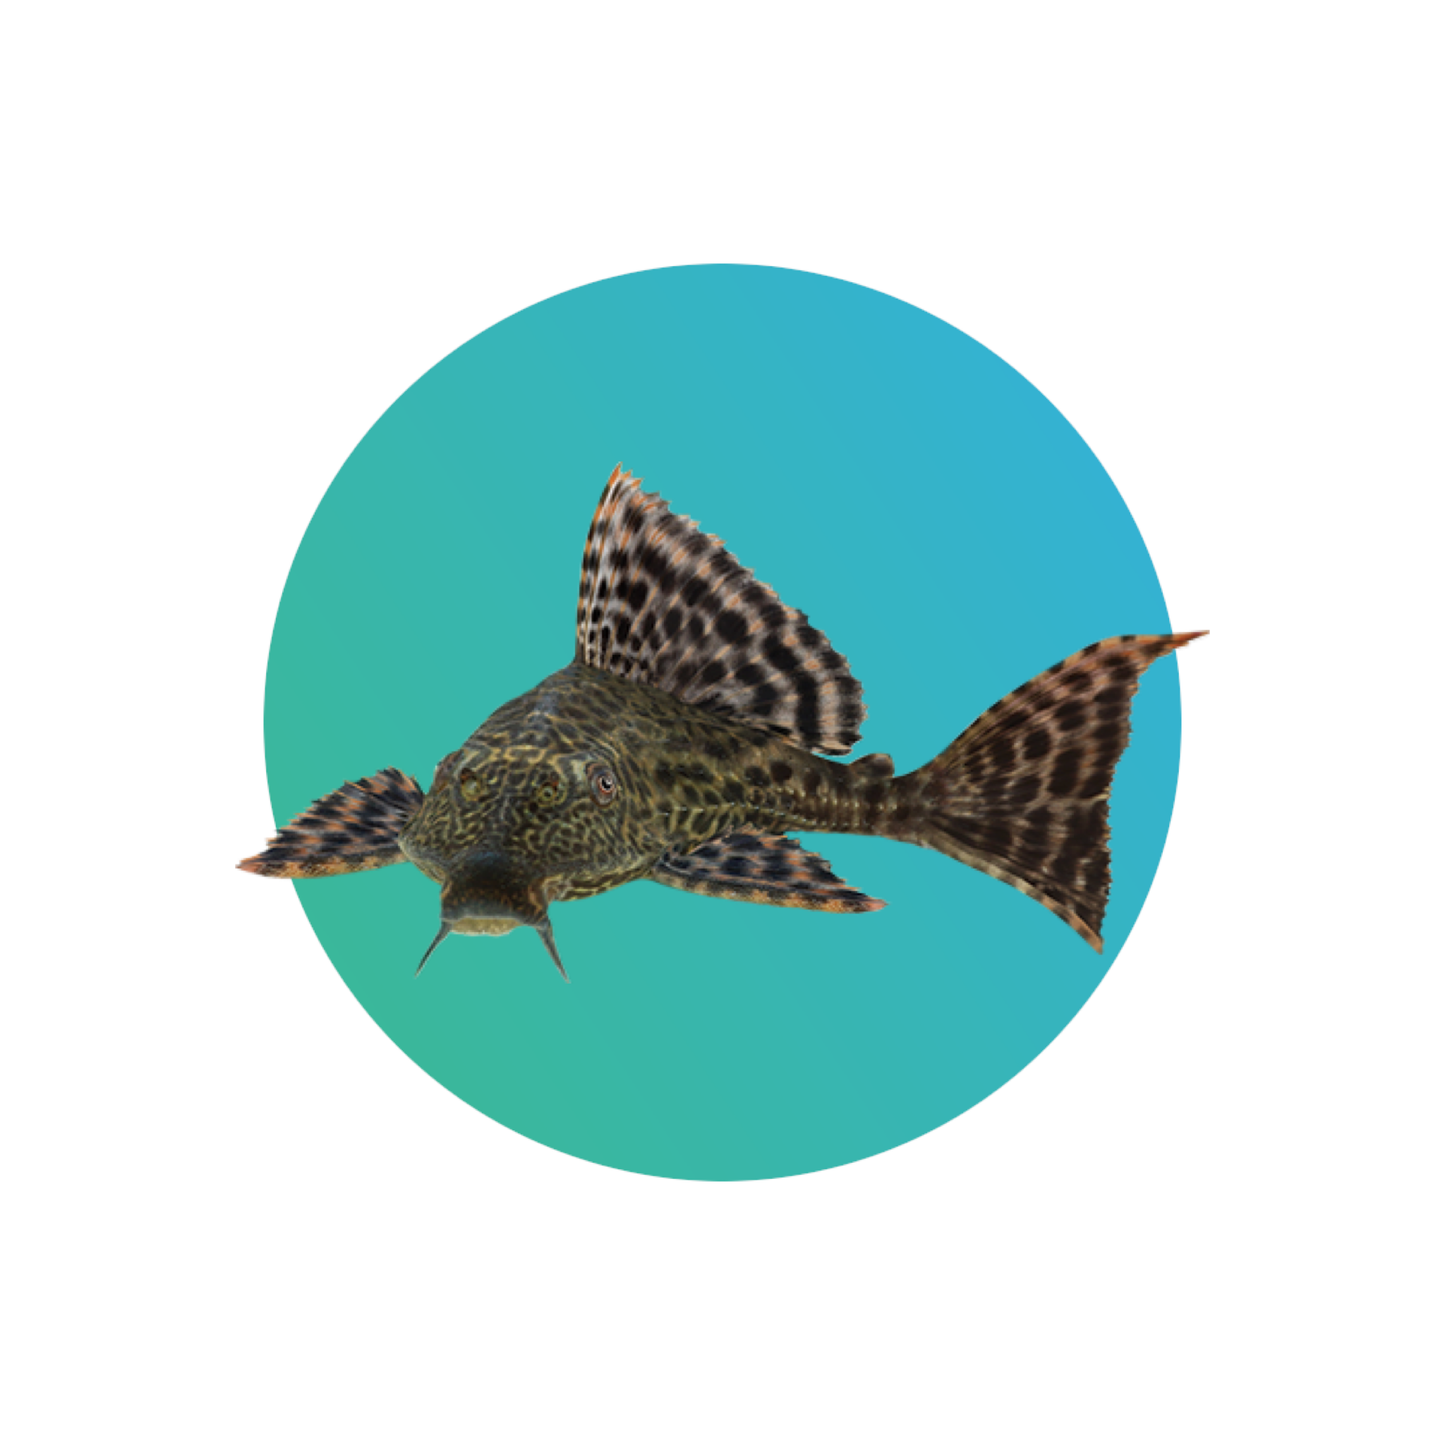 Common pleco or suckermouth catfish (Hypostomus plecostomus)